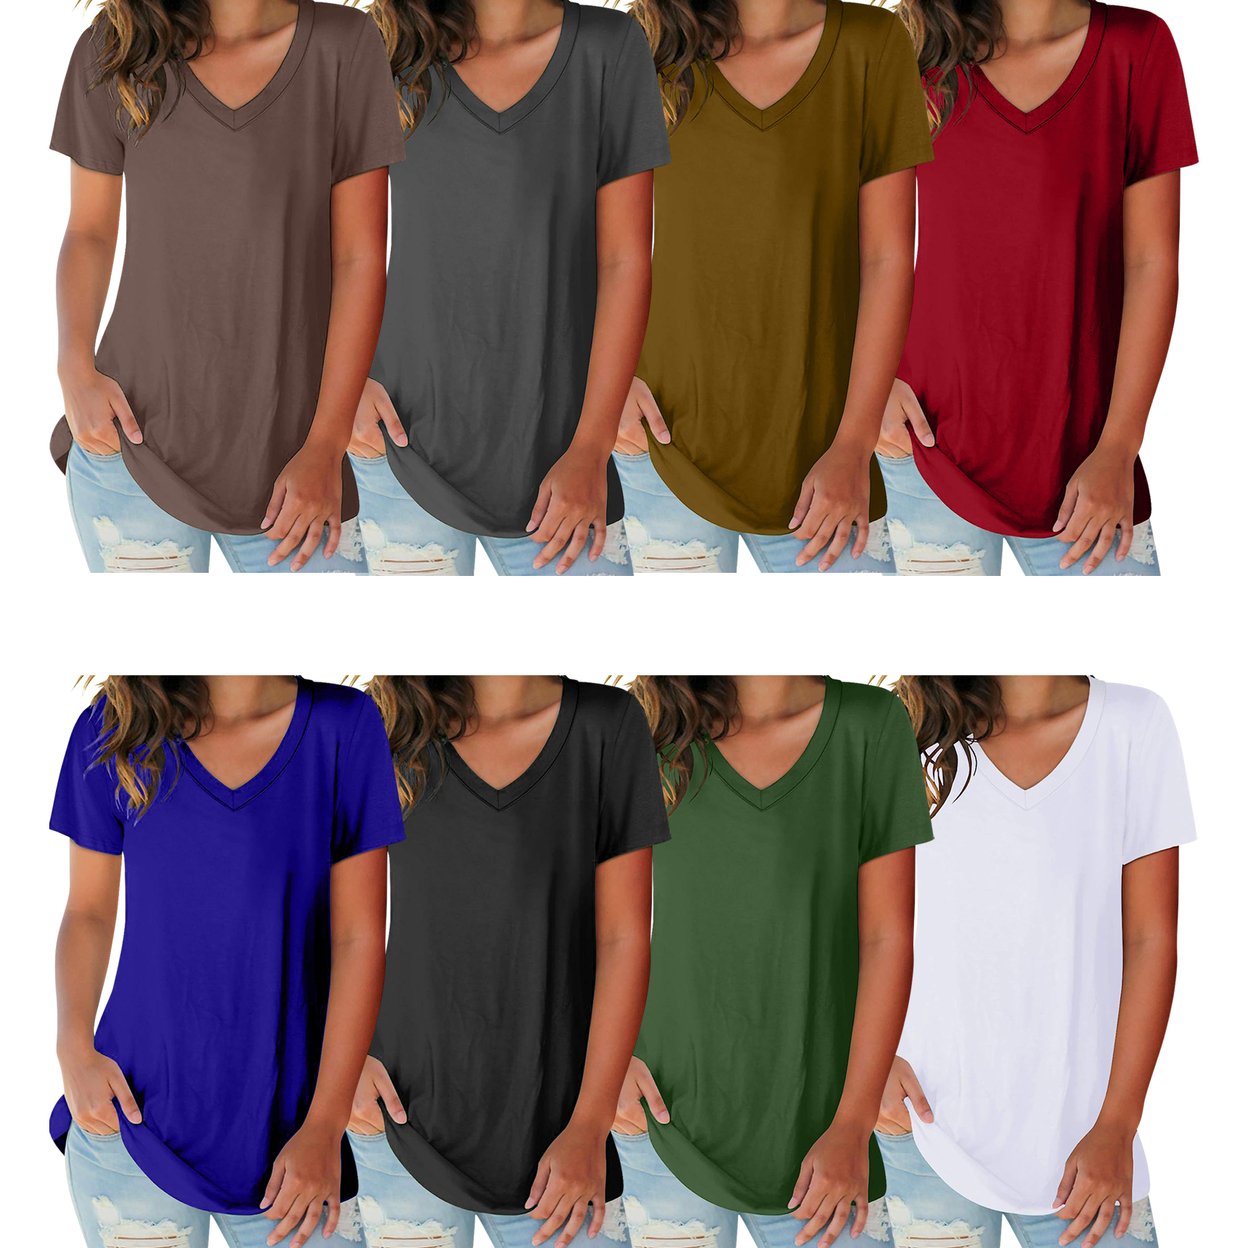 Women's Ultra-Soft Smooth Cotton Blend Basic V-Neck Short Sleeve Shirts - Grey, Medium